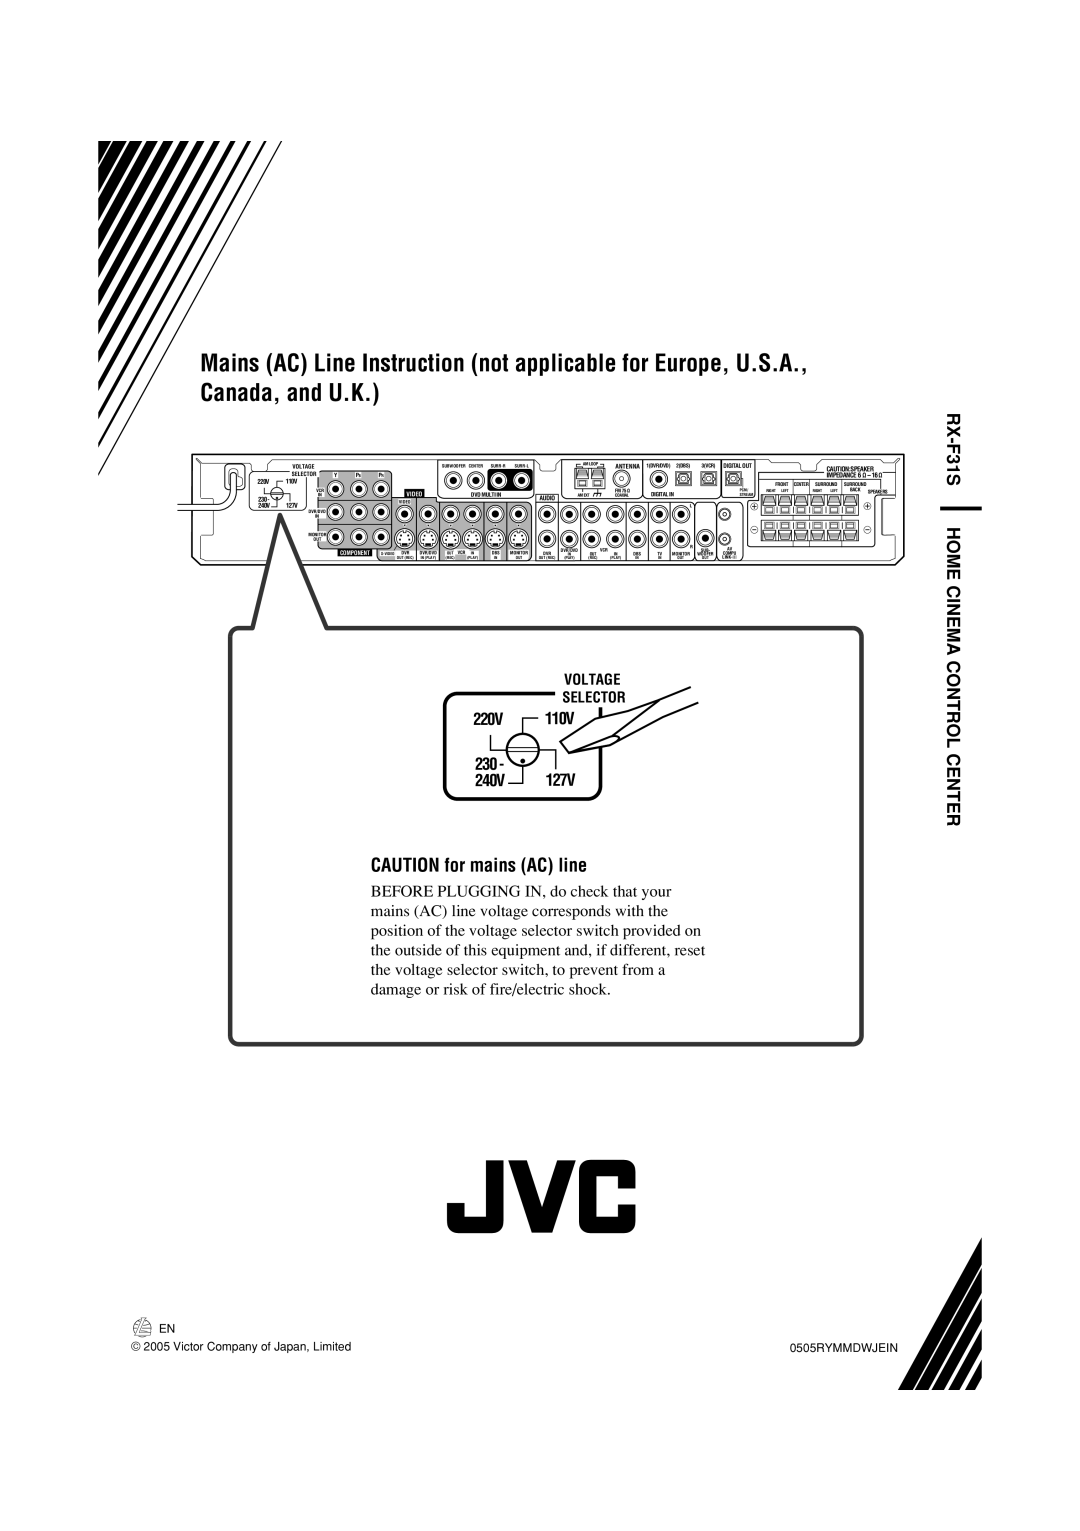 JVC manual RX-F31S HOME CINEMA CONTROL CENTER, 220V, 240V, Voltage Selector, 110V, Video, Audio, 127V 